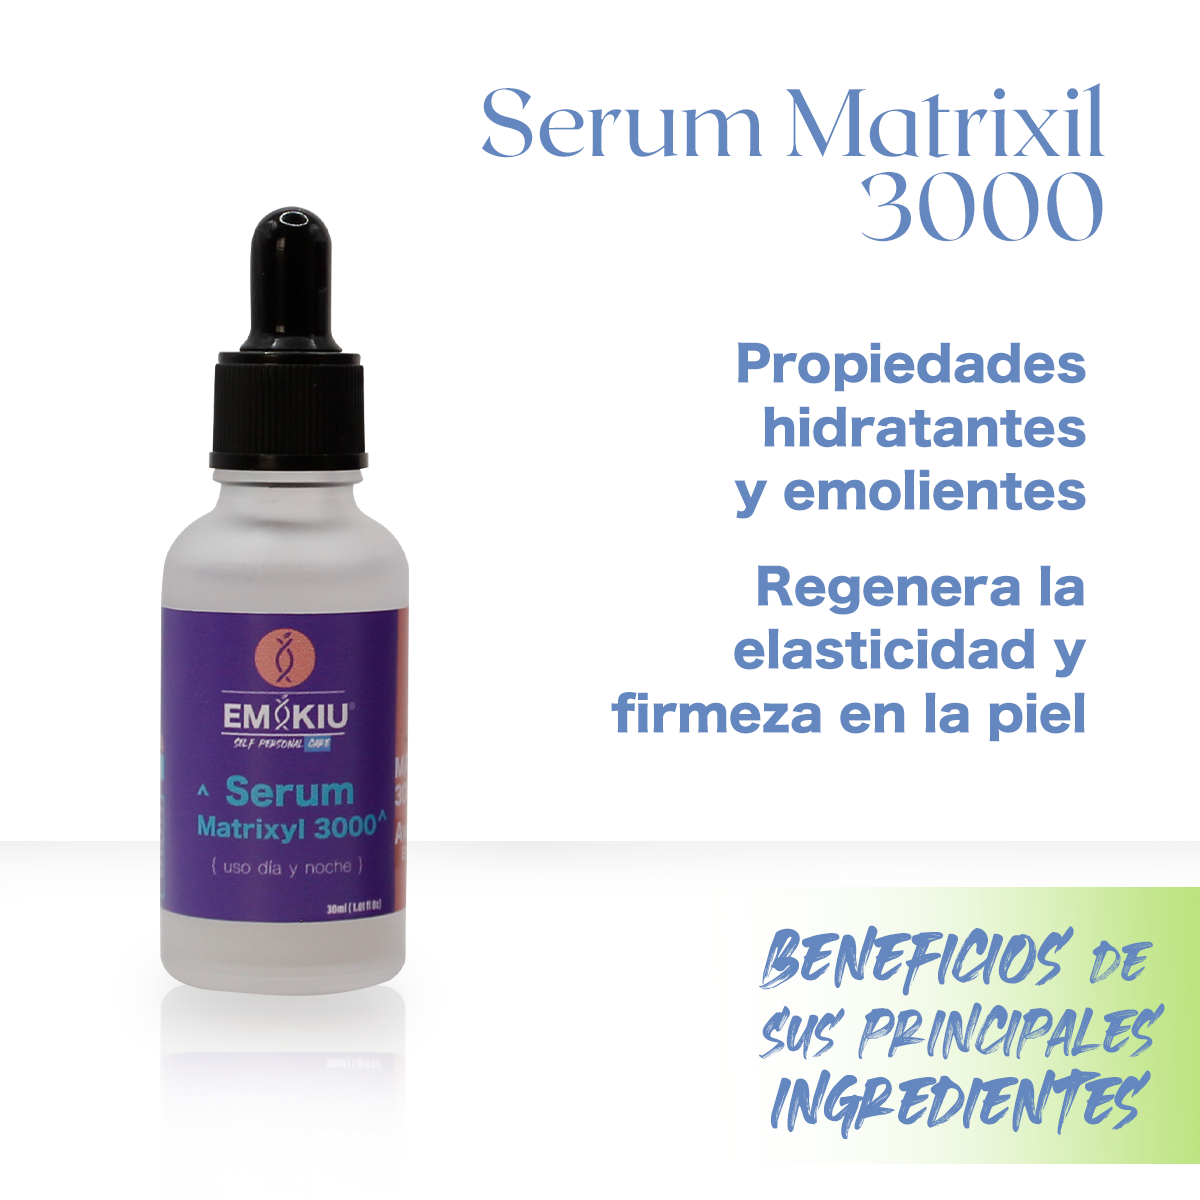 Serum facial Matrixyl 3000 con retinol.